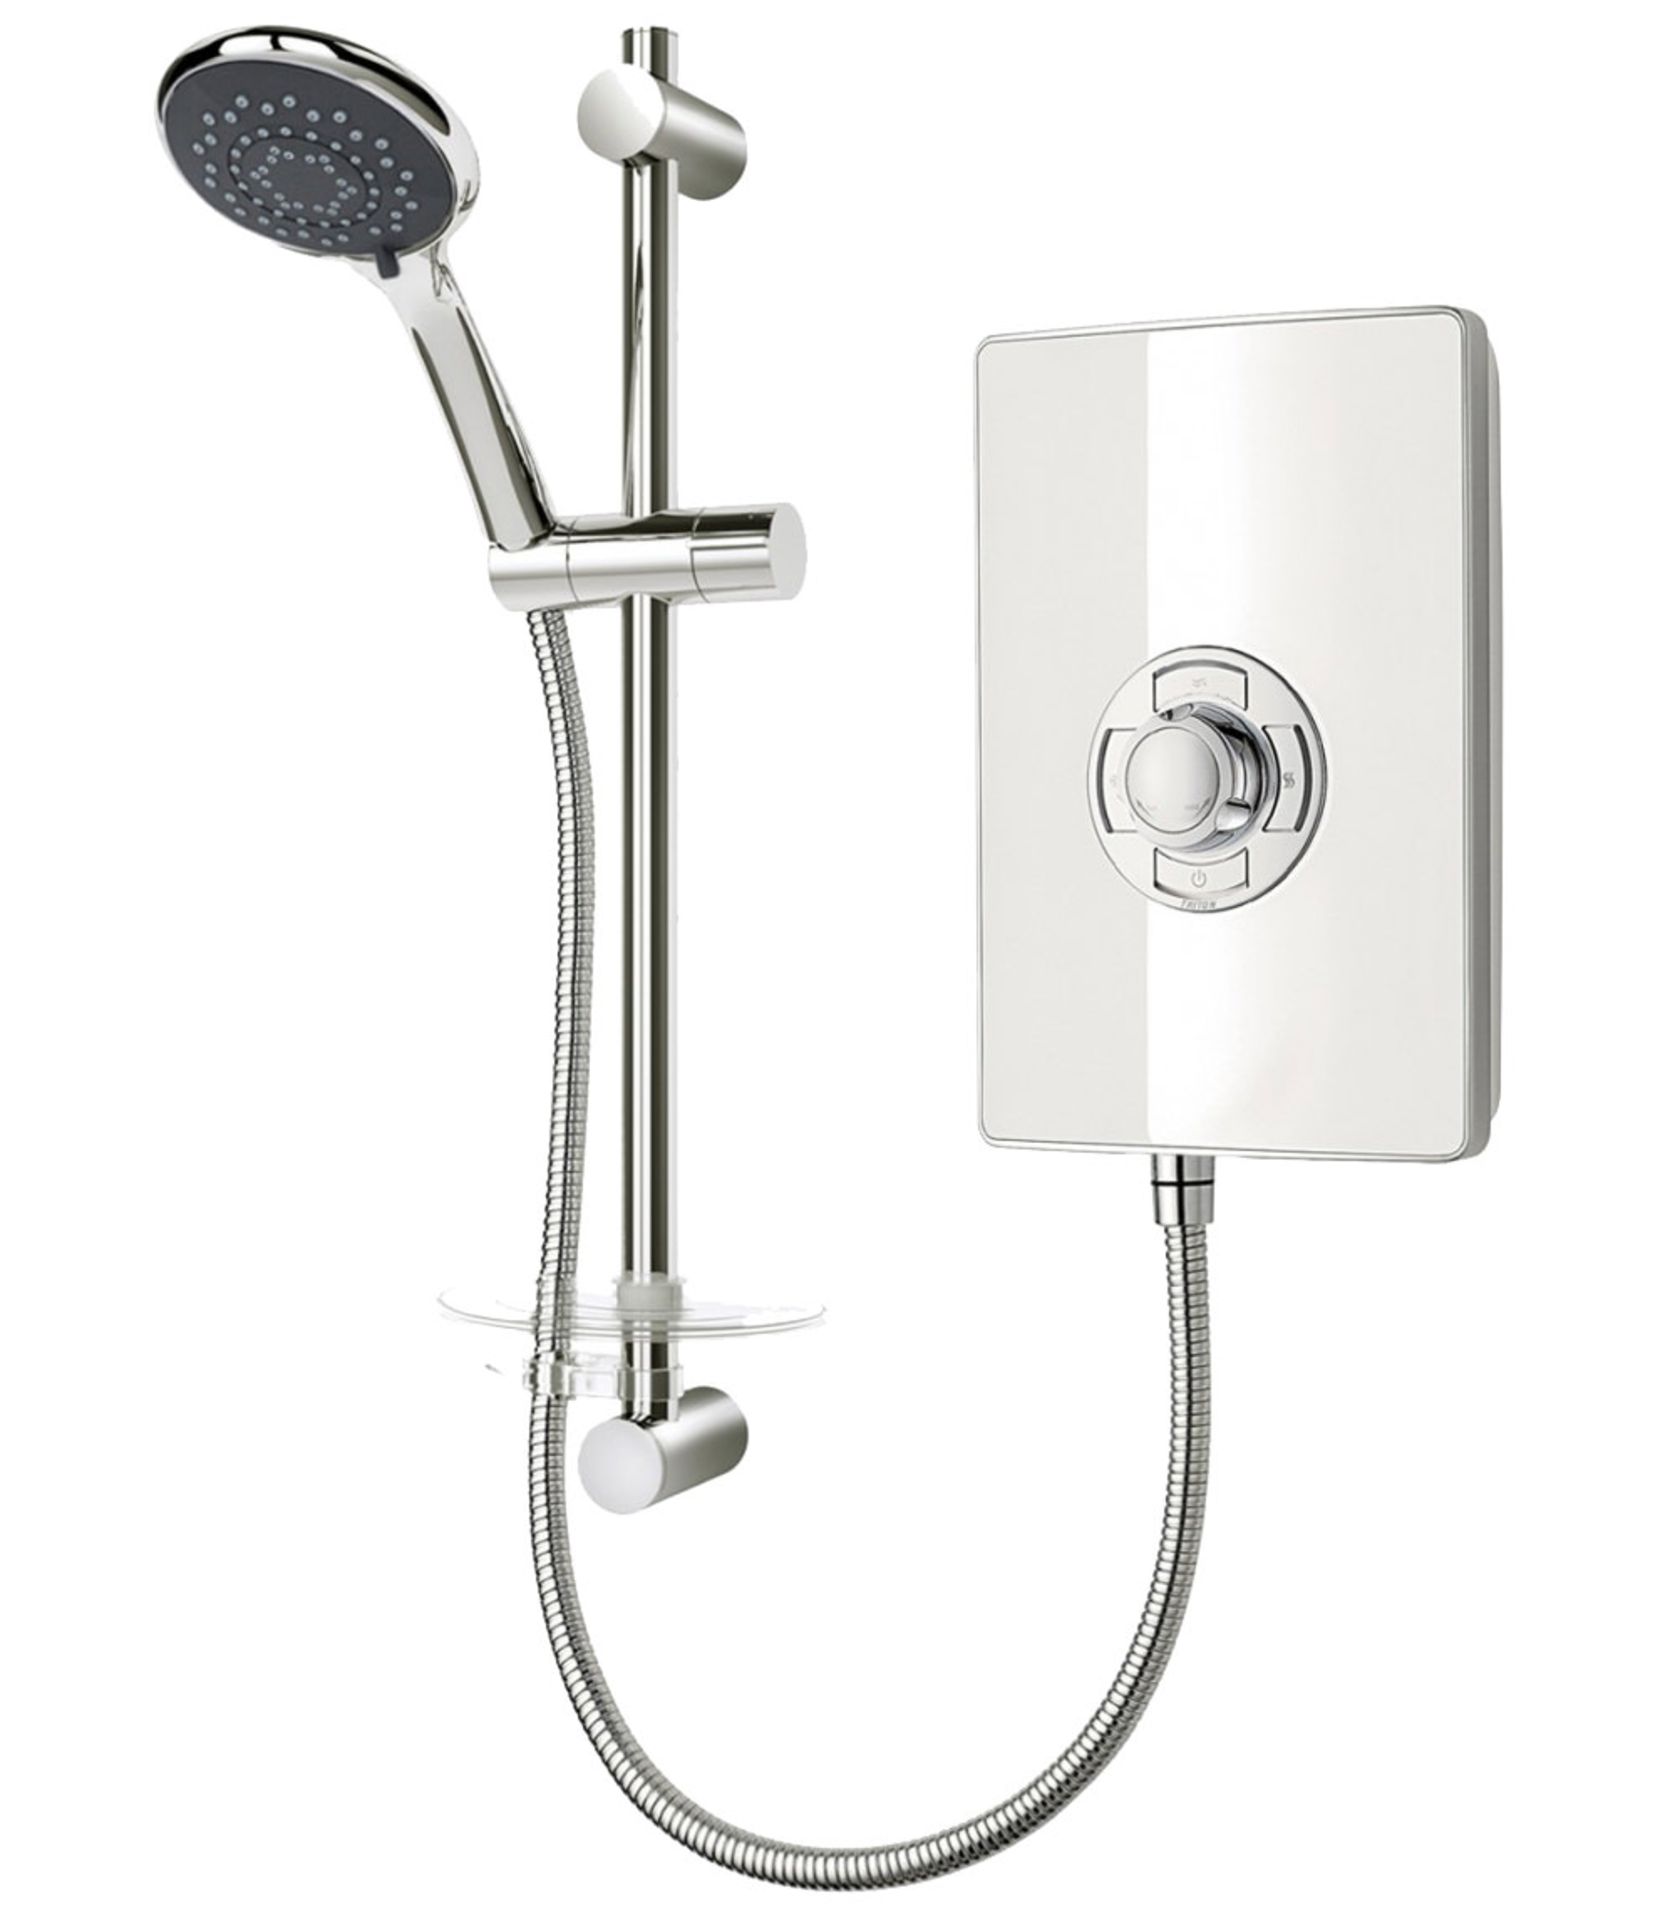 (DW246) Triton Aspirante White Gloss Electric Shower 8.5 KW. RRP £112.99. Create an enduring m...